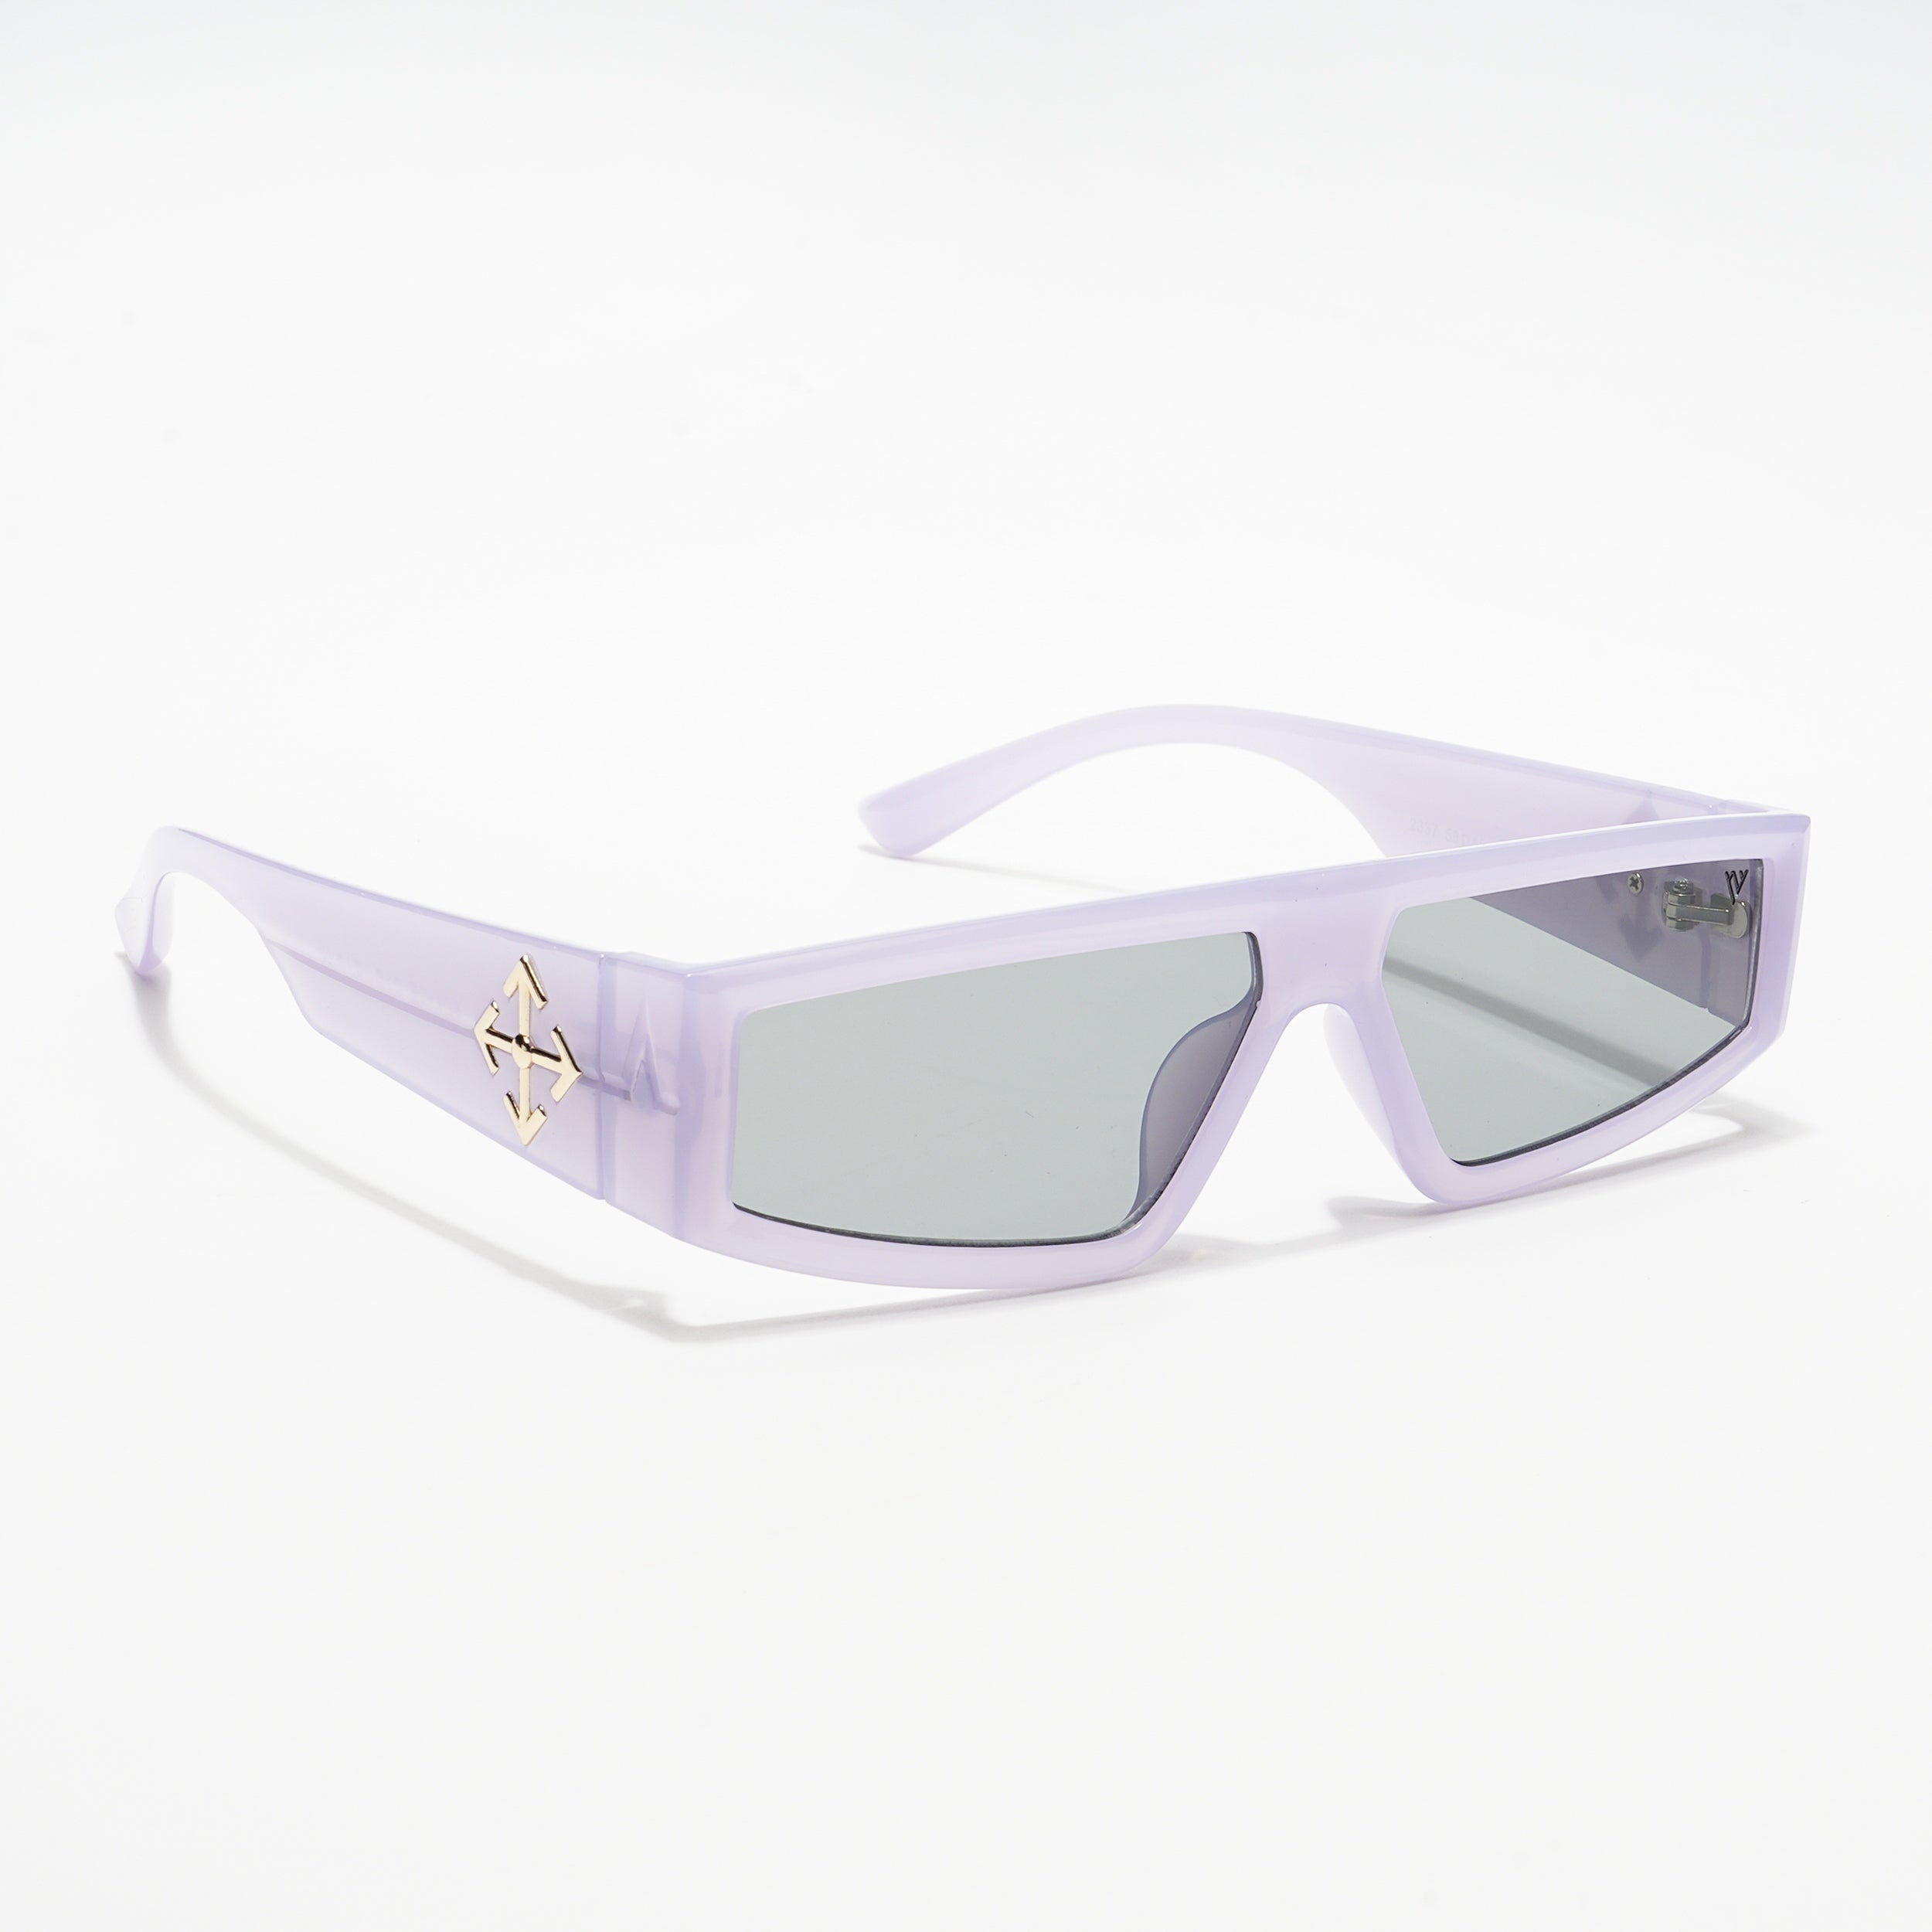 Voyage Purple Rectangle Sunglasses (2337MG3874)